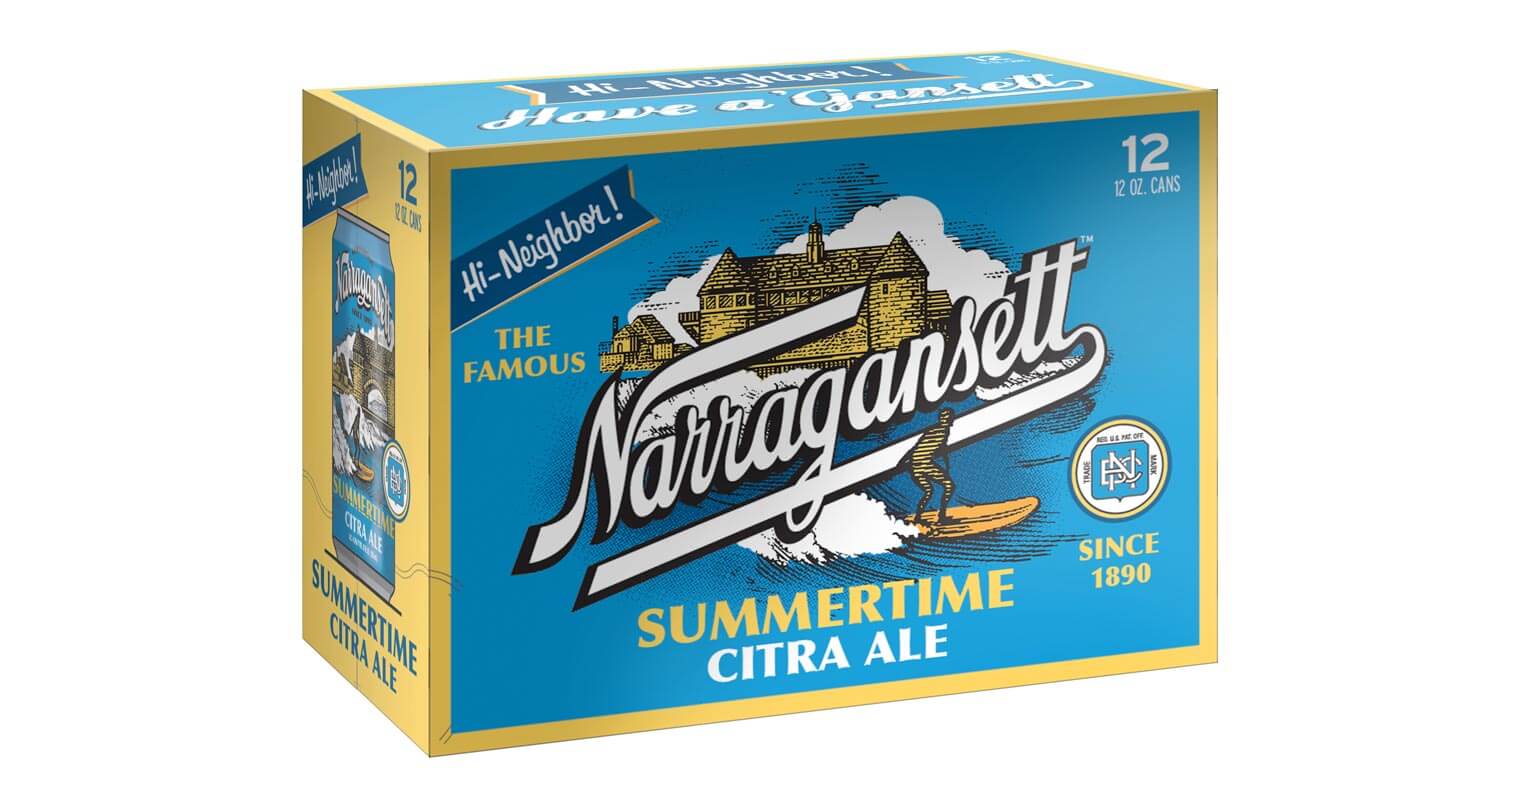 Narragansett Unveils Summertime Citra Ale, narragansett, beer news